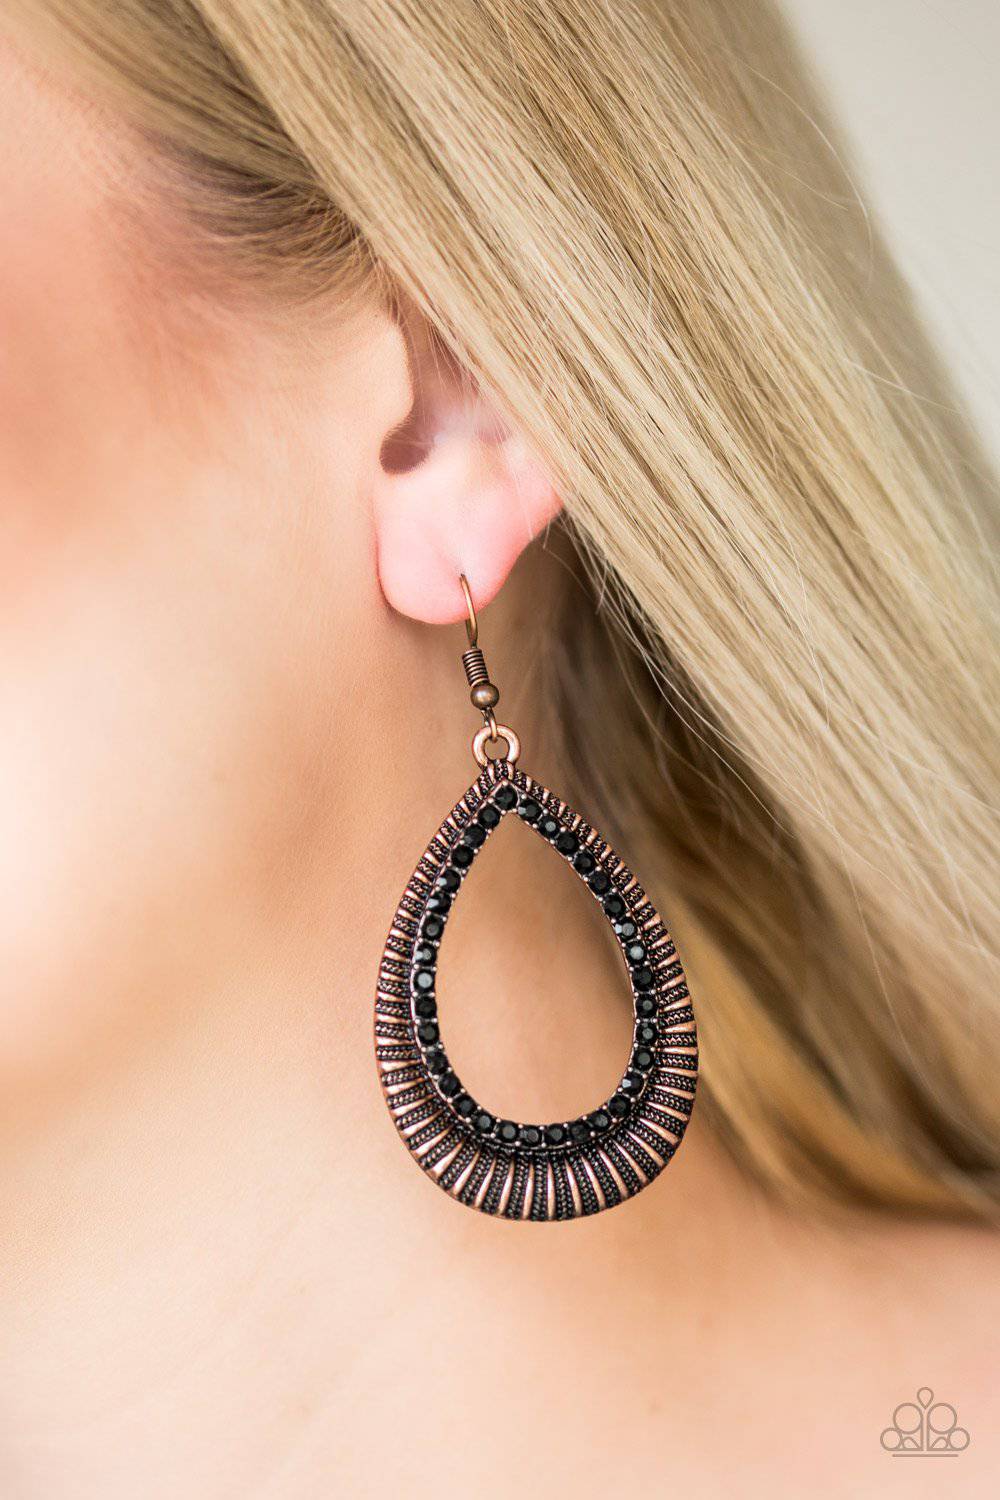 Right As REIGN - Copper & Black Rhinestone Earrings - Paparazzi Accessories - GlaMarous Titi Jewels